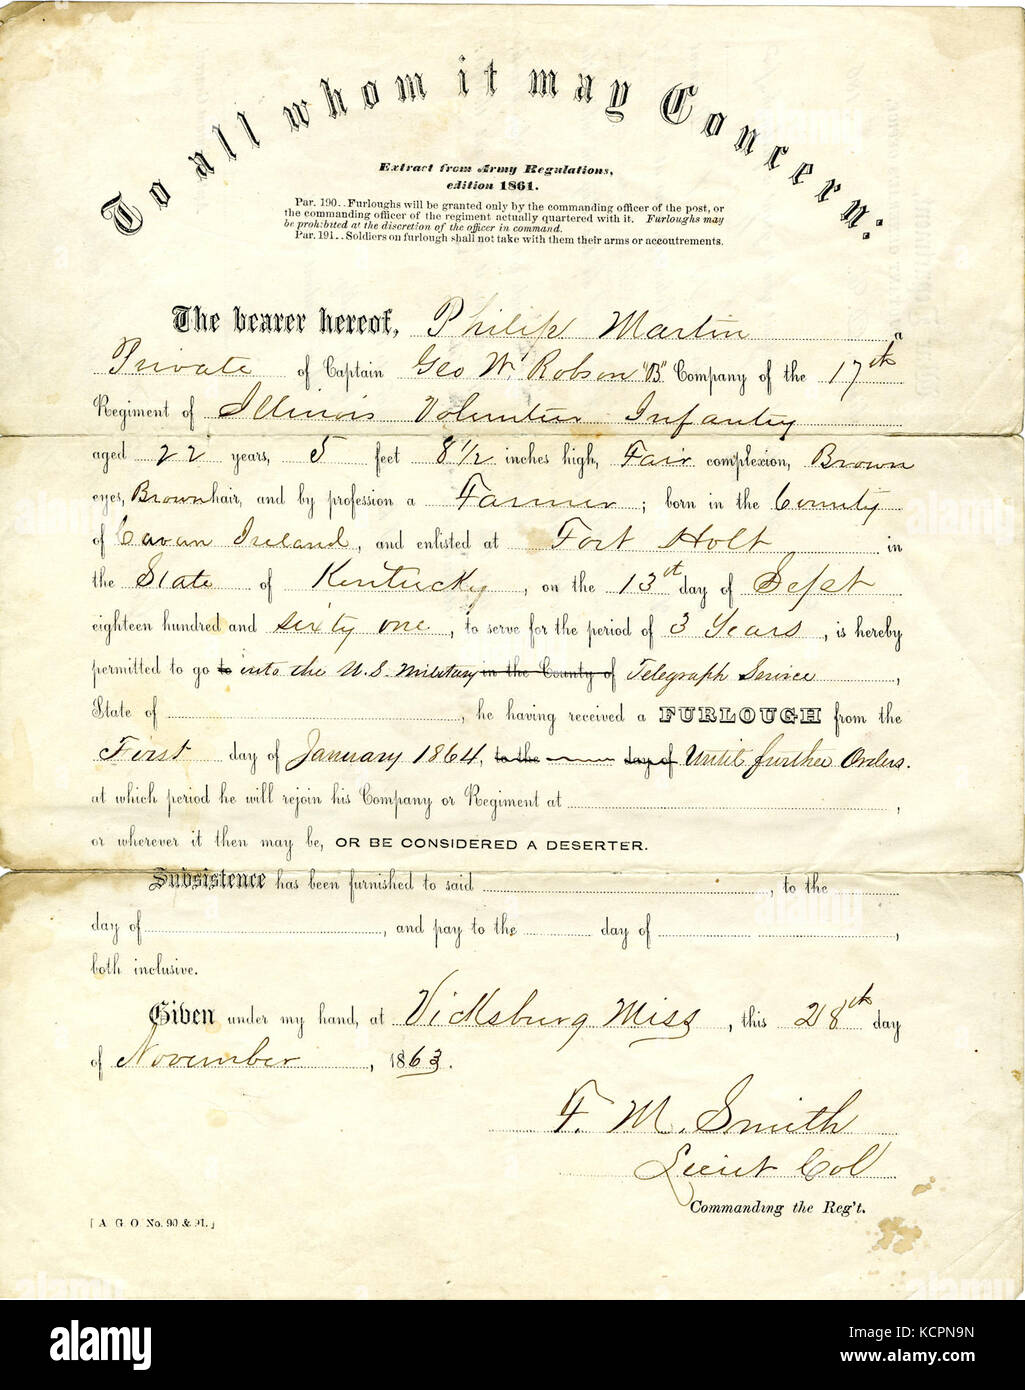 Licencia de Philip Martin, firmado F.M. Smith, 28 de noviembre de 1863 Foto de stock